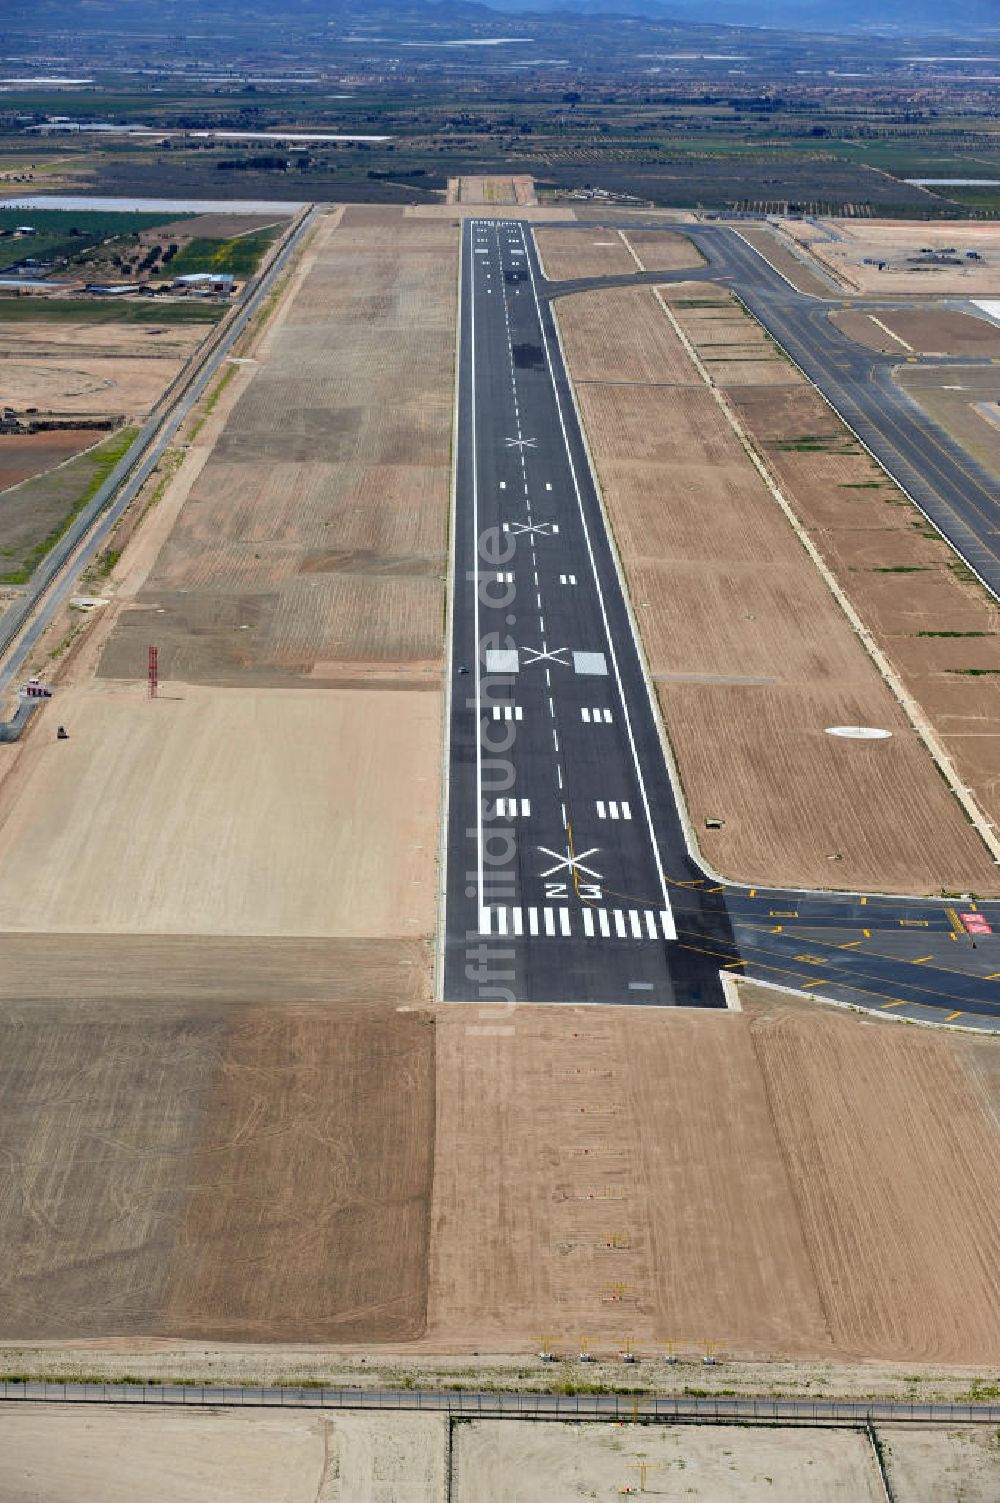 Luftbild MURCIA CORVERA - Neubau Flughafen Murcia Corvera in der Region Murcia in Spanien